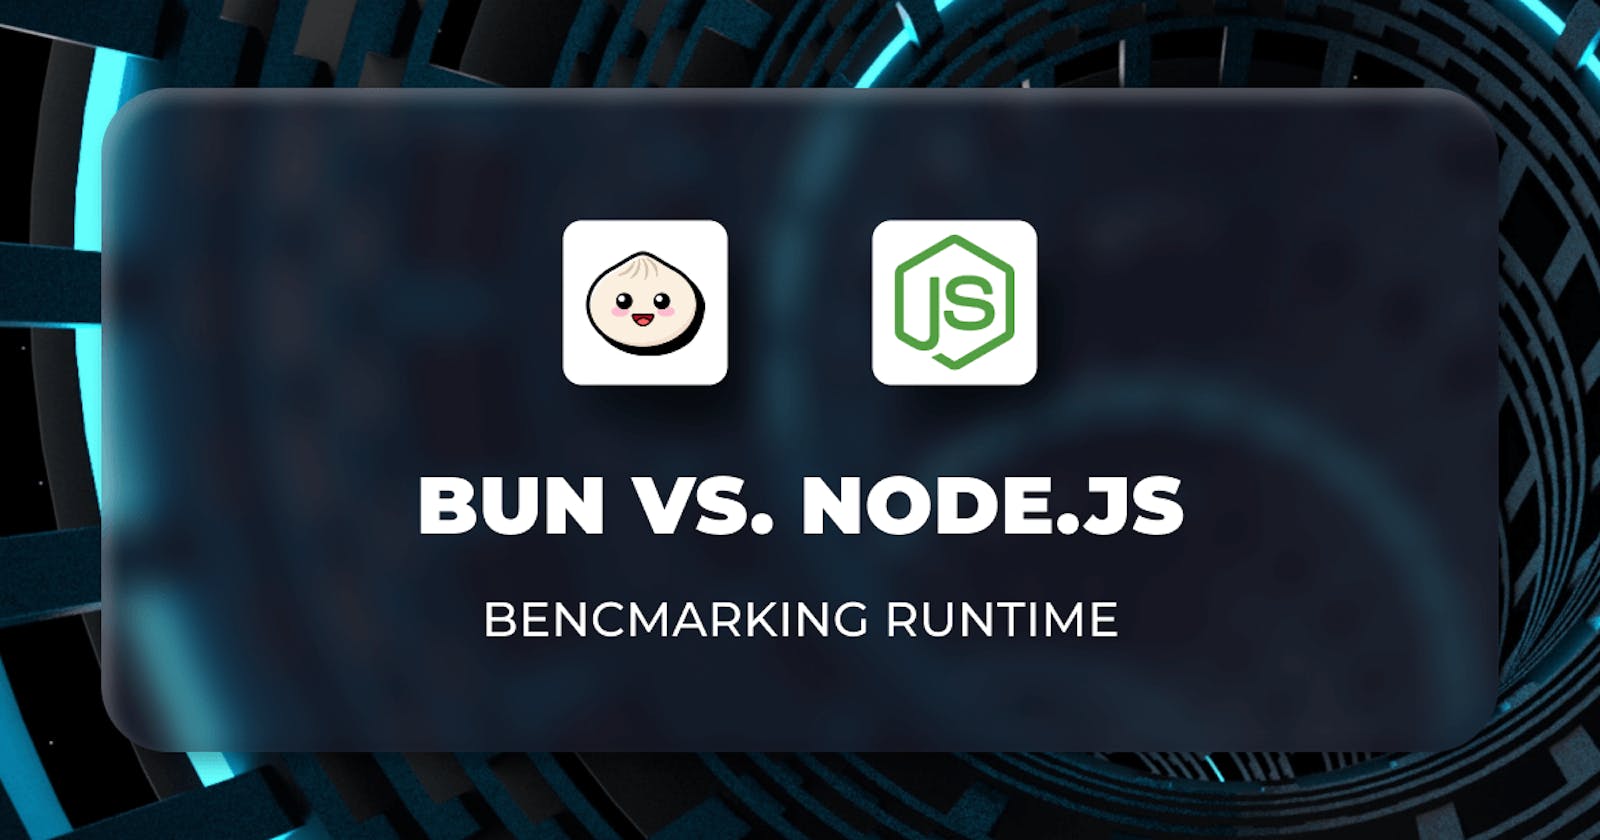 Bun vs. Node.js - Benchmarking runtime